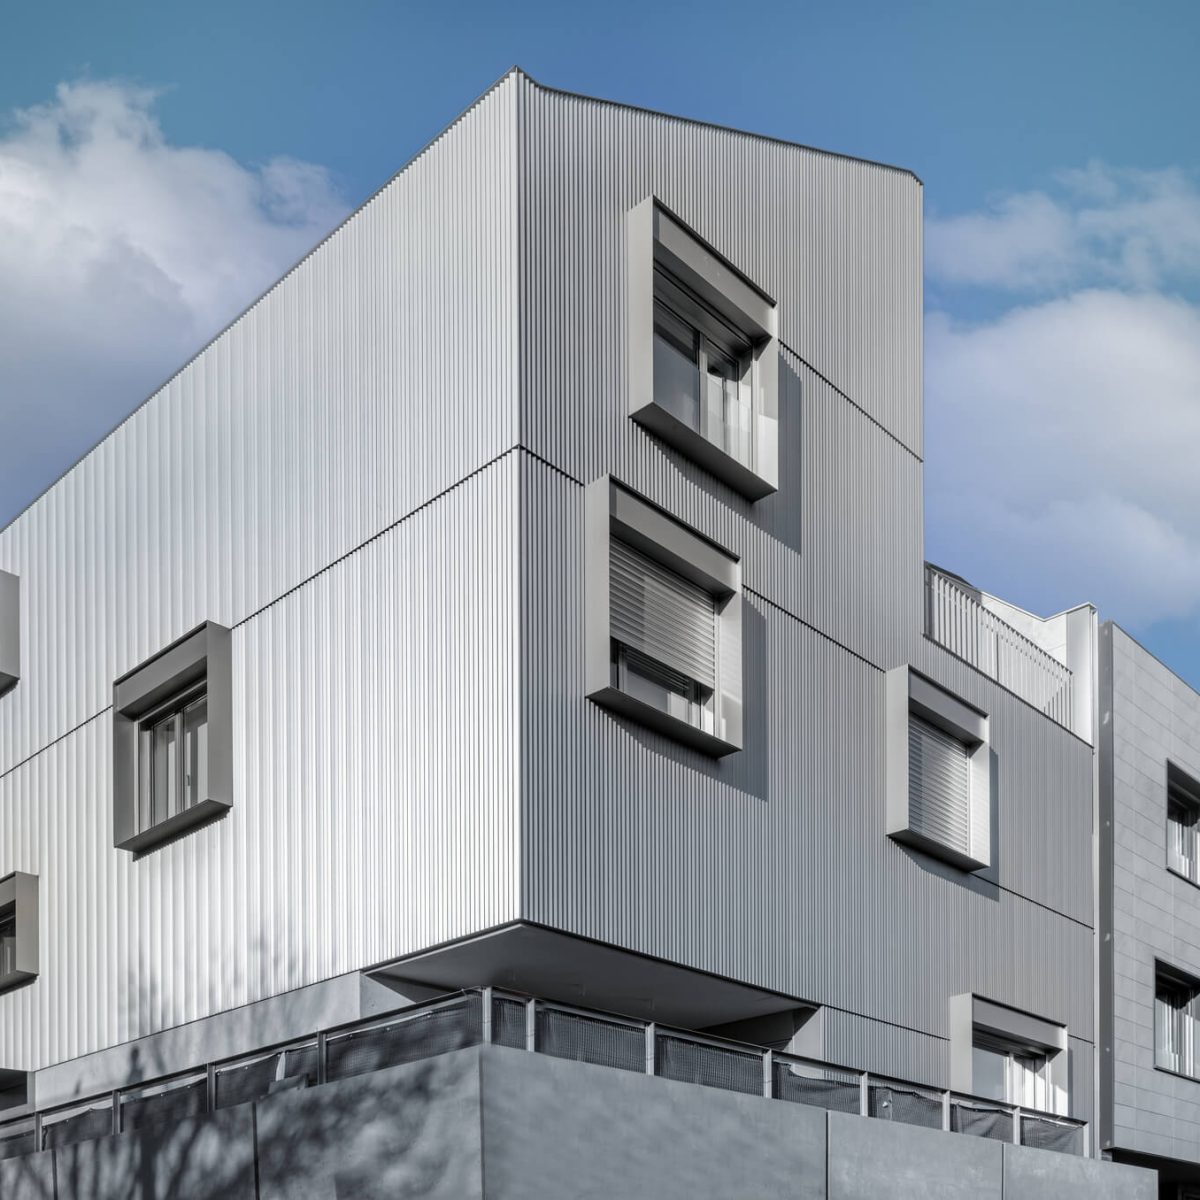 Revestimiento exterior aluminio Alu Stock viviendas manuel gascon 2